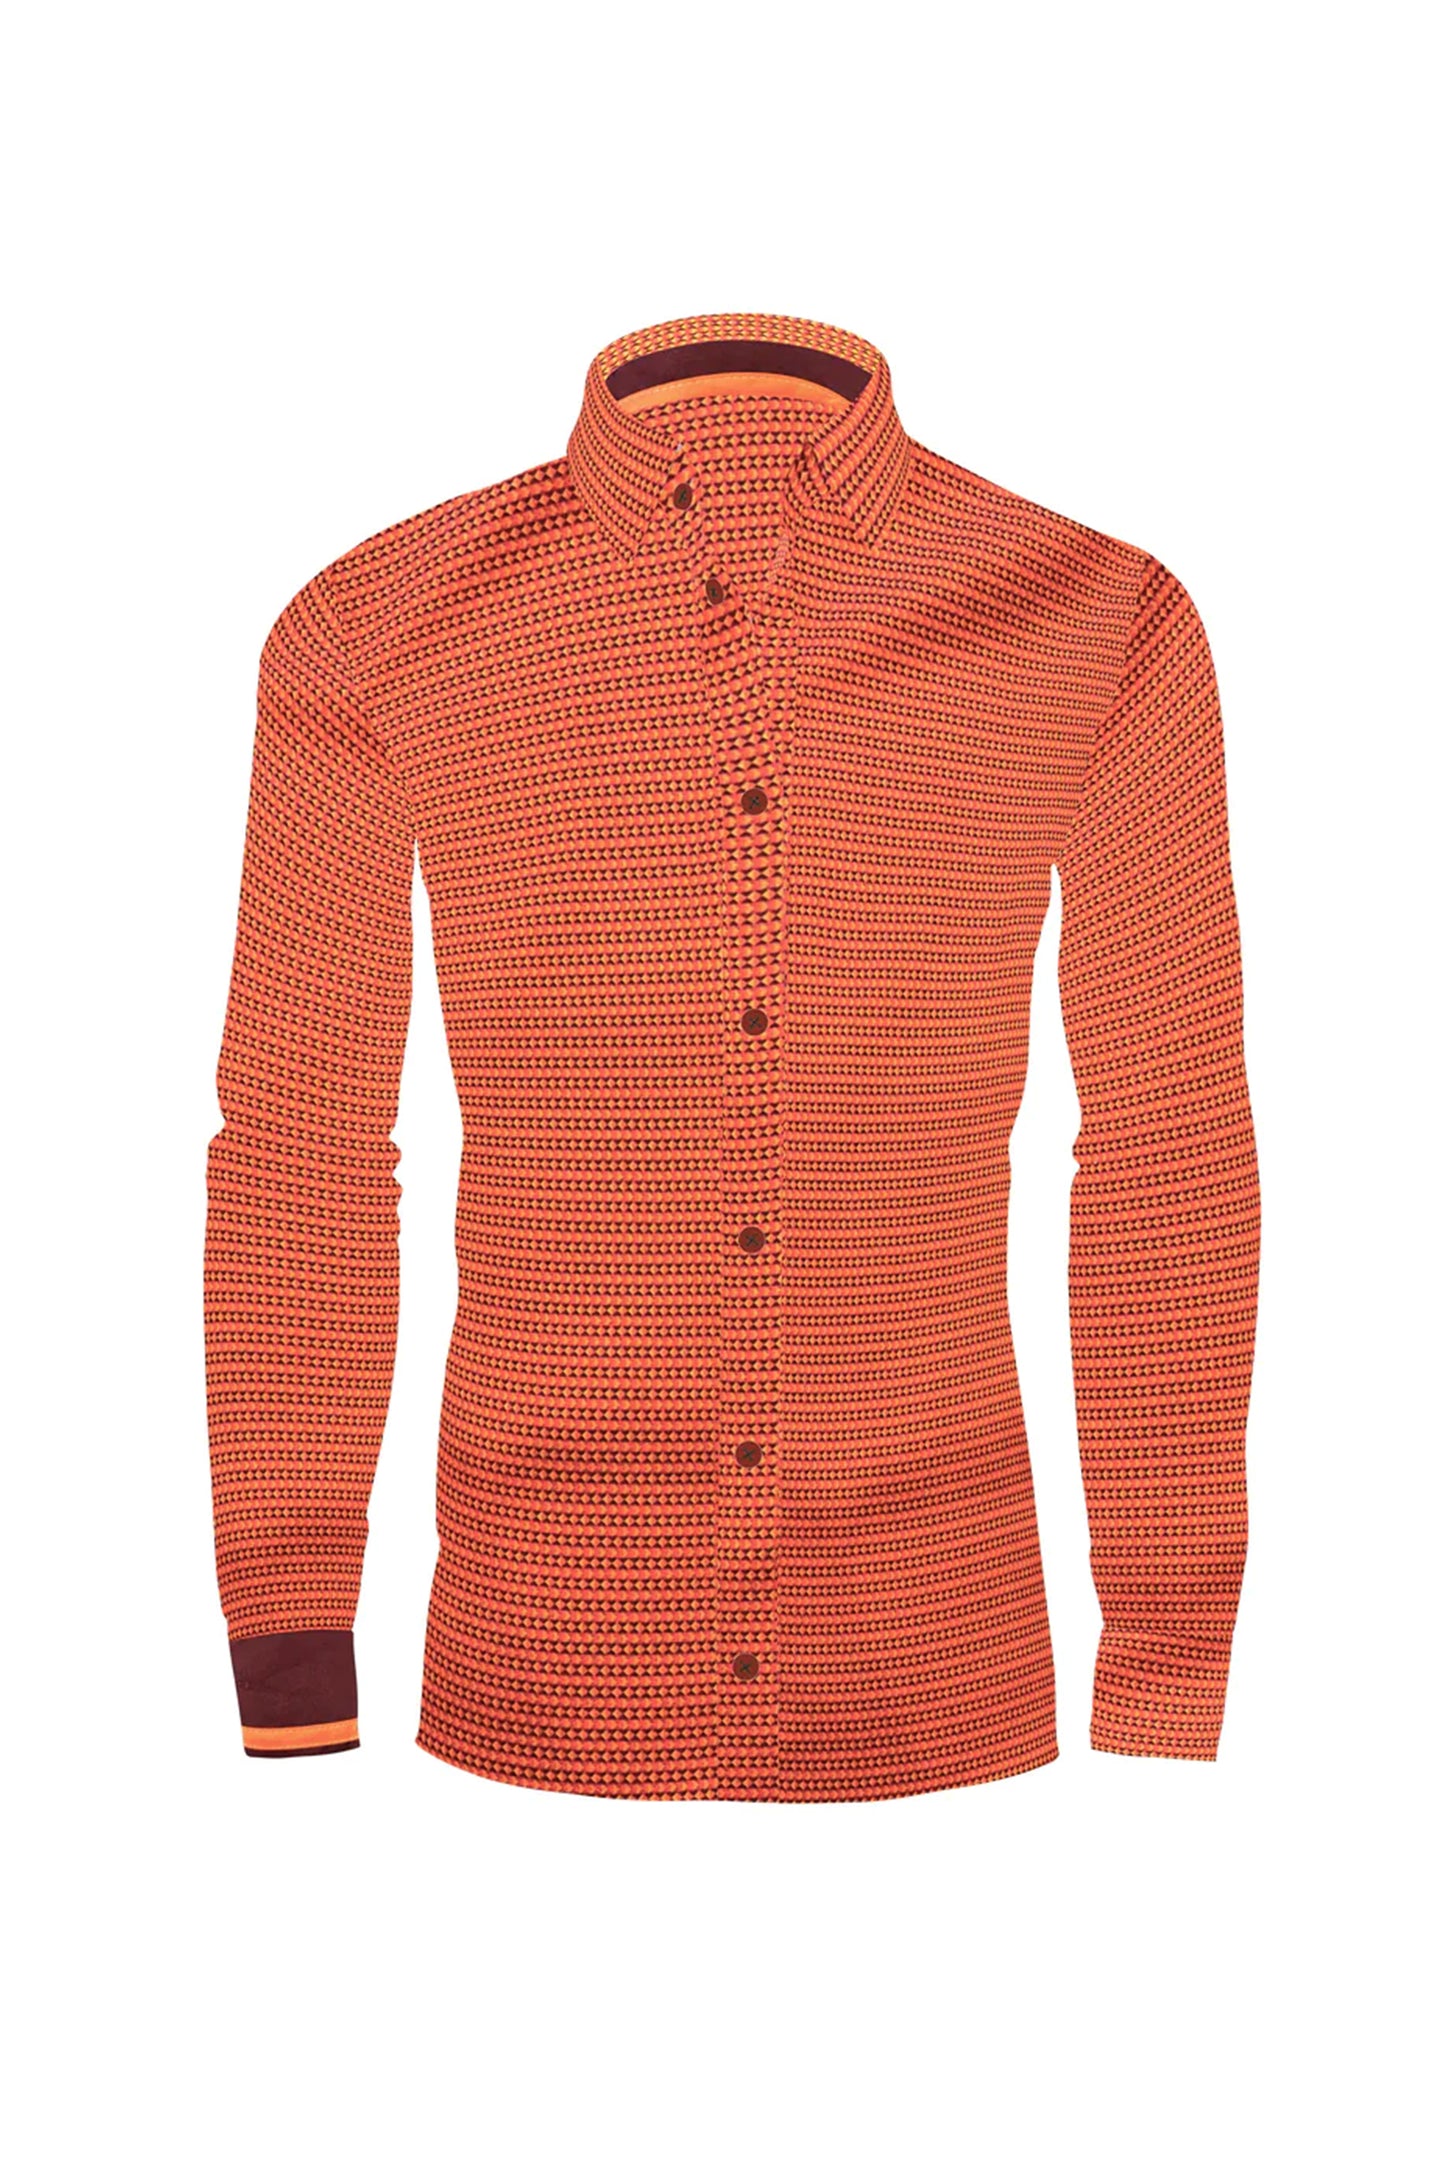 Autumn Ember Men's Dress Shirt CASUAL SHIRT On Sale 30% Off Vercini